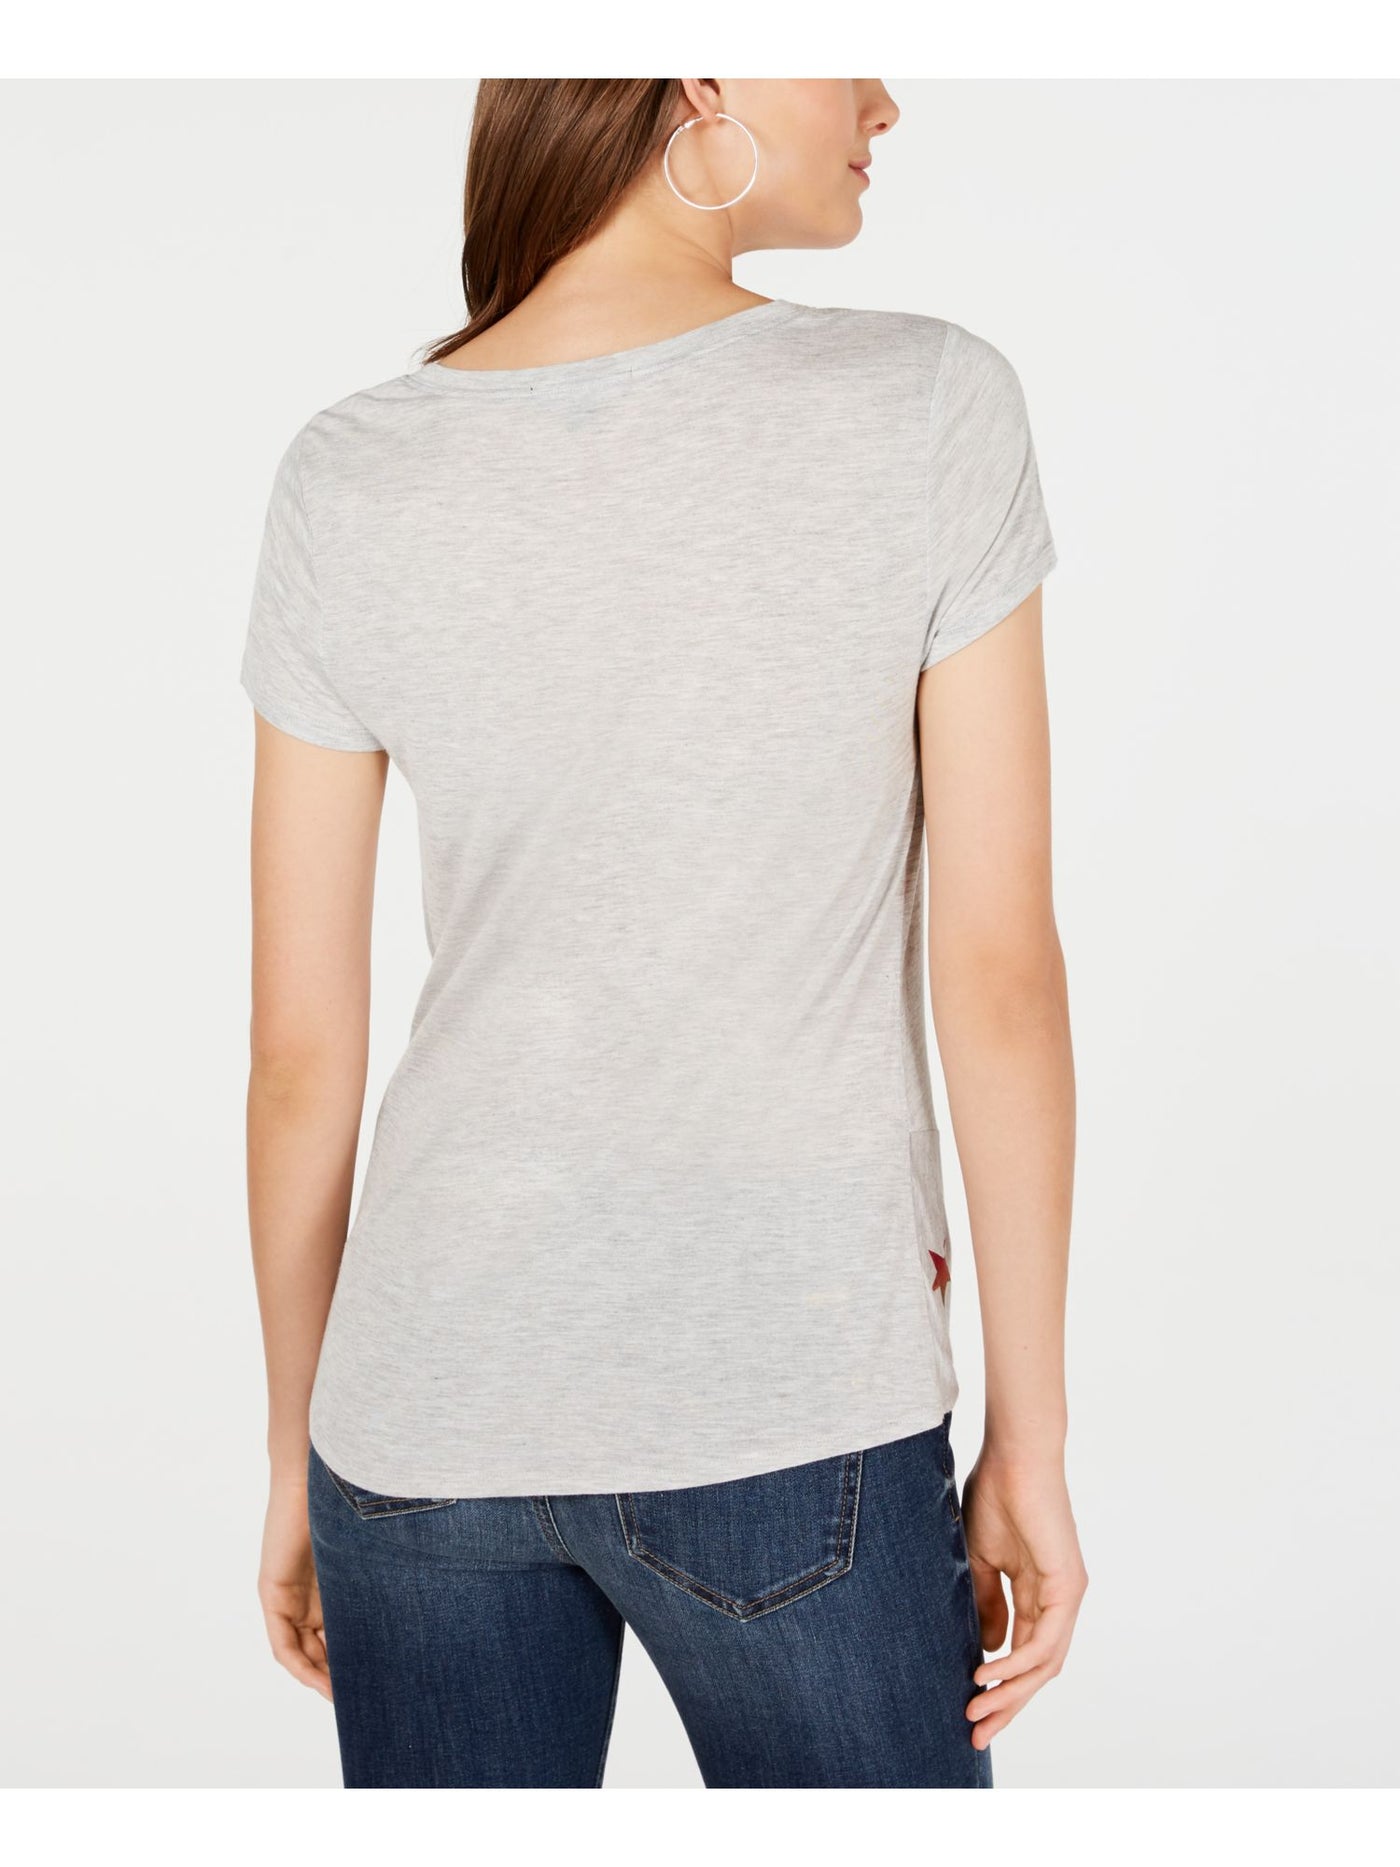 INC Womens Tist Front Short Sleeve Jewel Neck T-Shirt